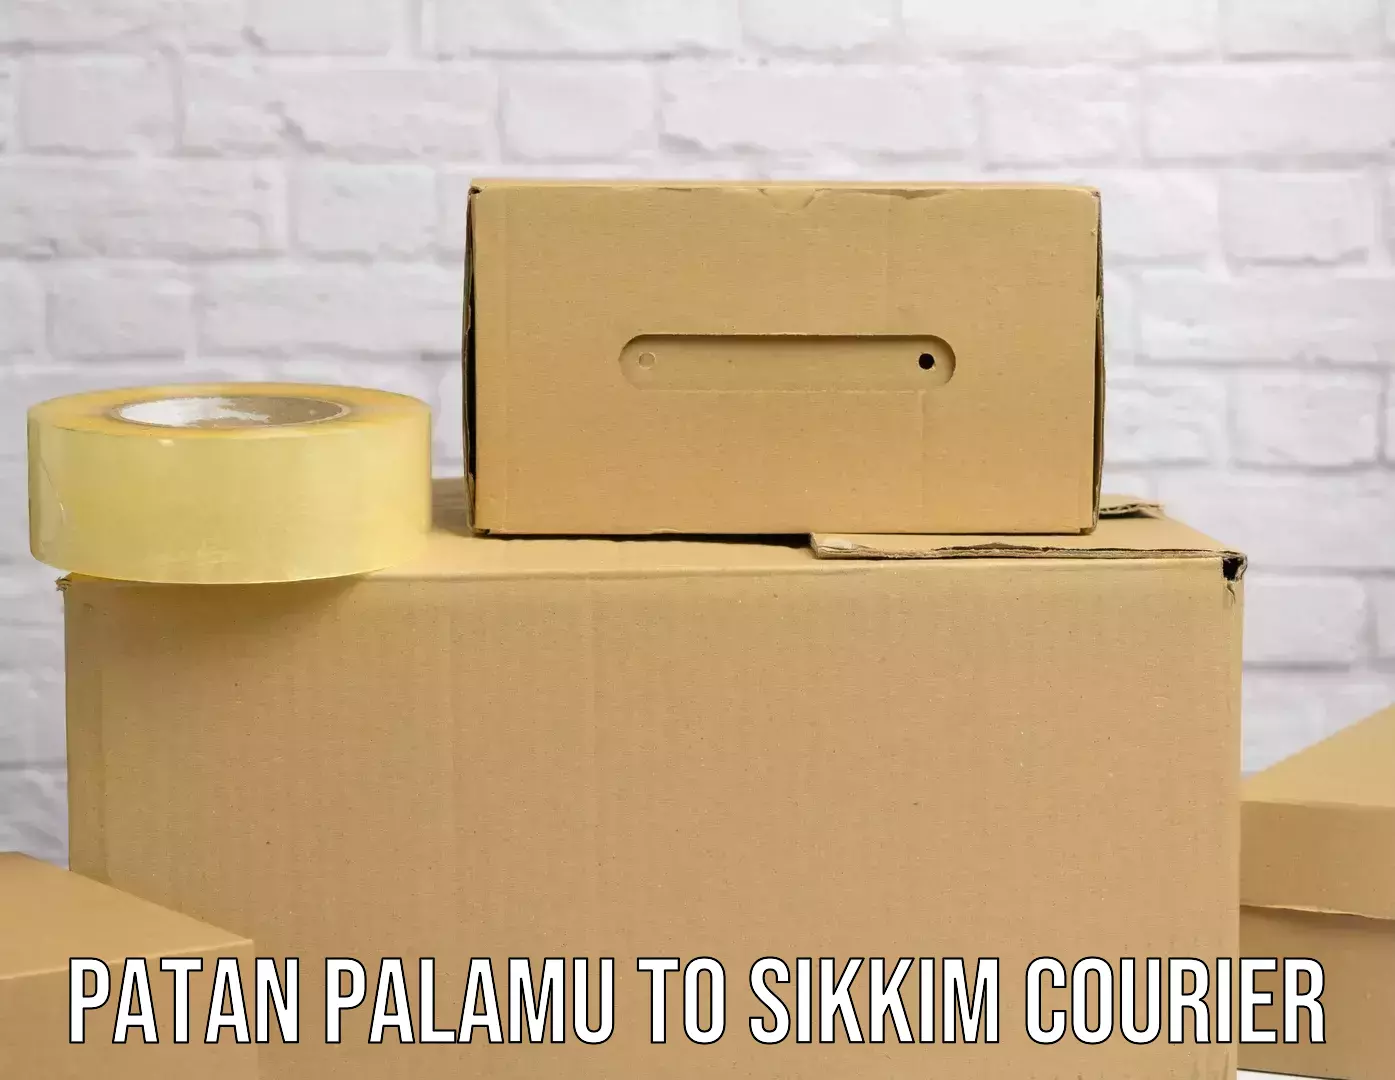 Efficient freight service Patan Palamu to Sikkim